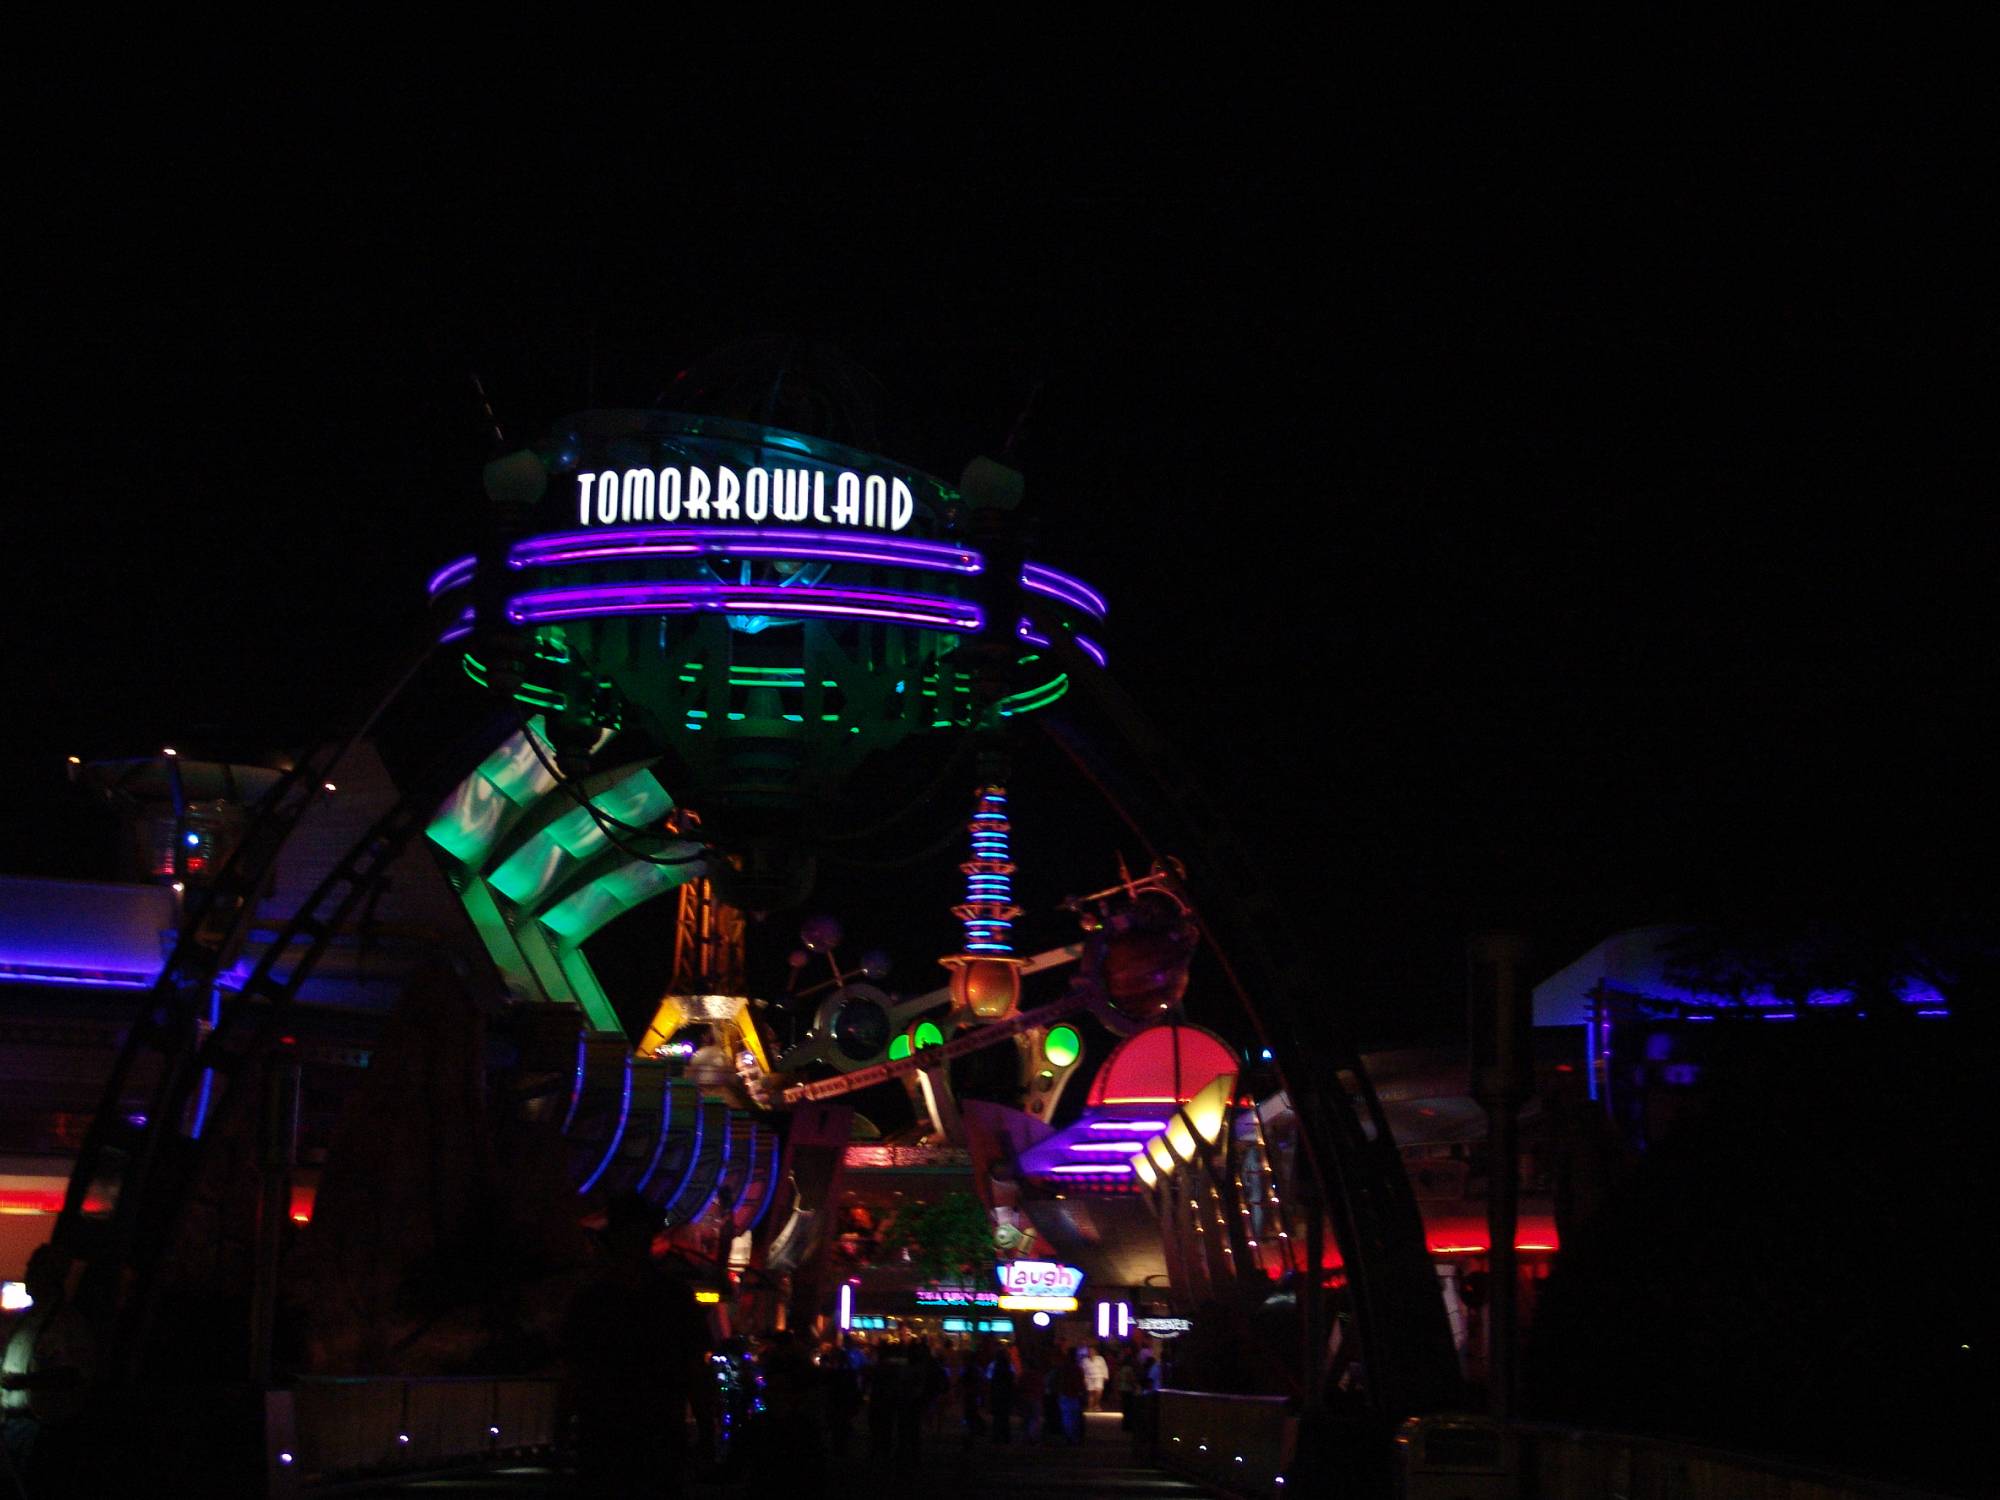 Magic Kingdom - Tomorrowland